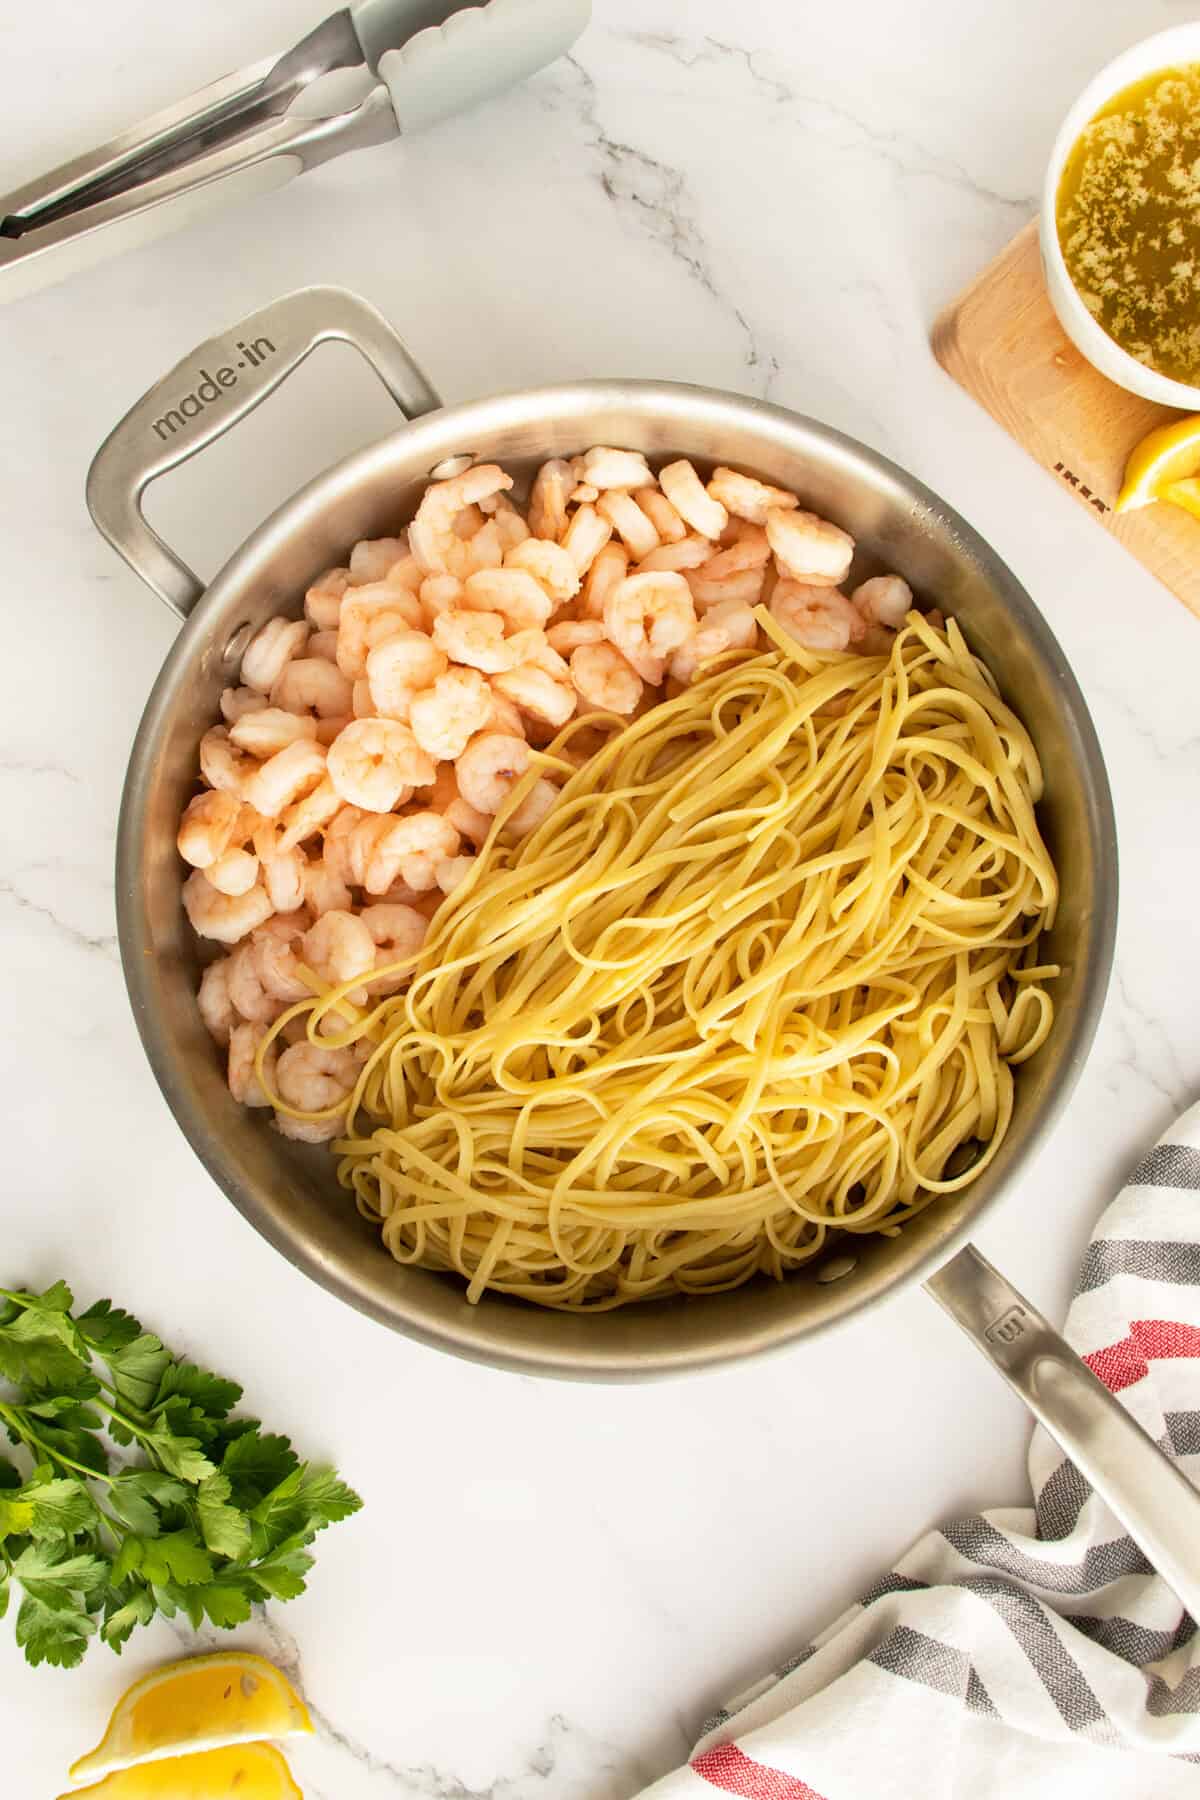 Shrimp and pasta in pot